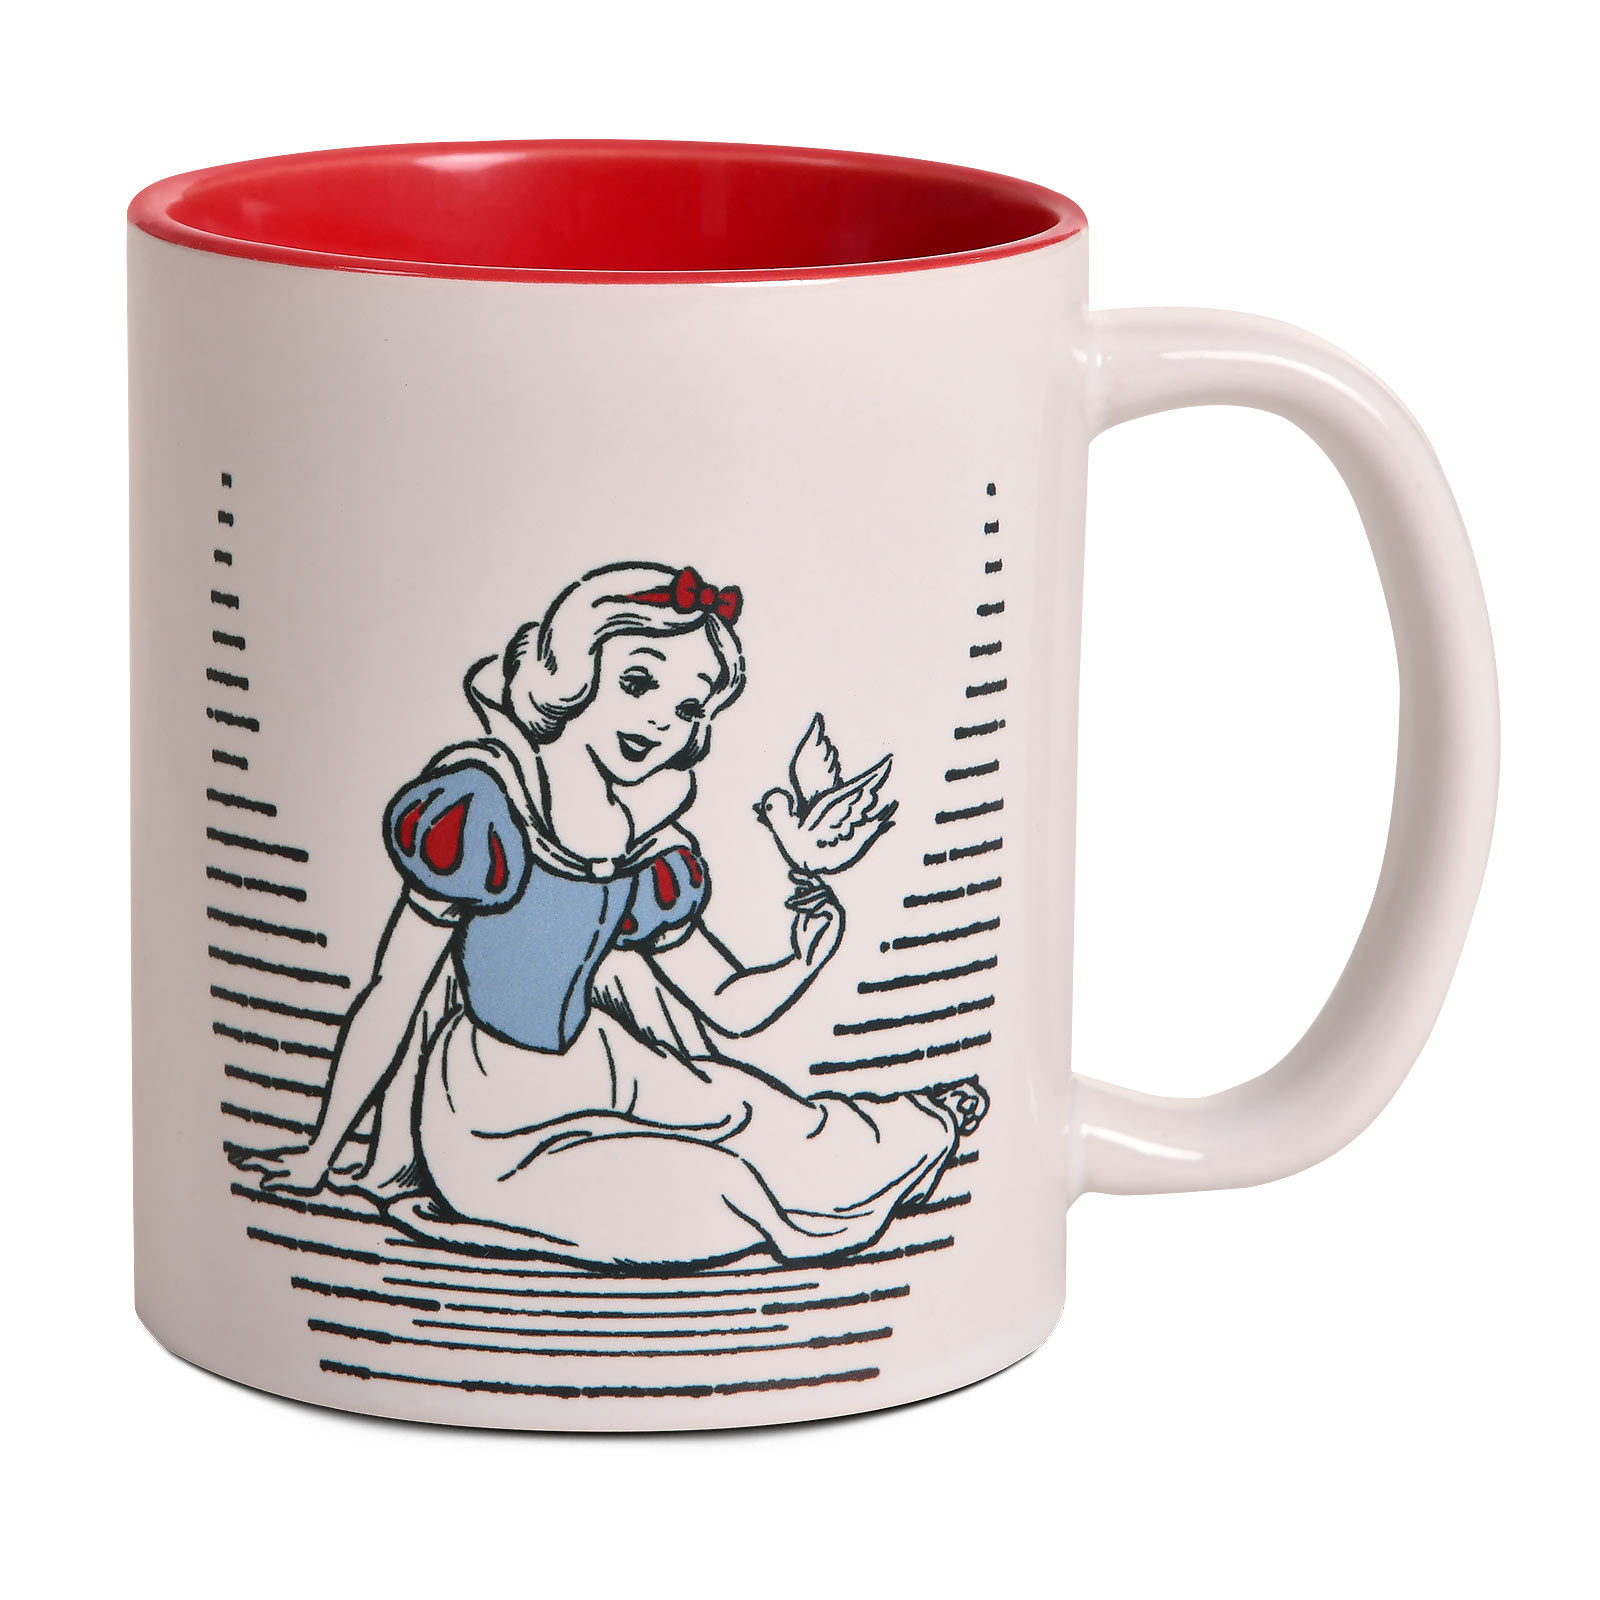 Snow White - Someday My Prince Will Come Mug